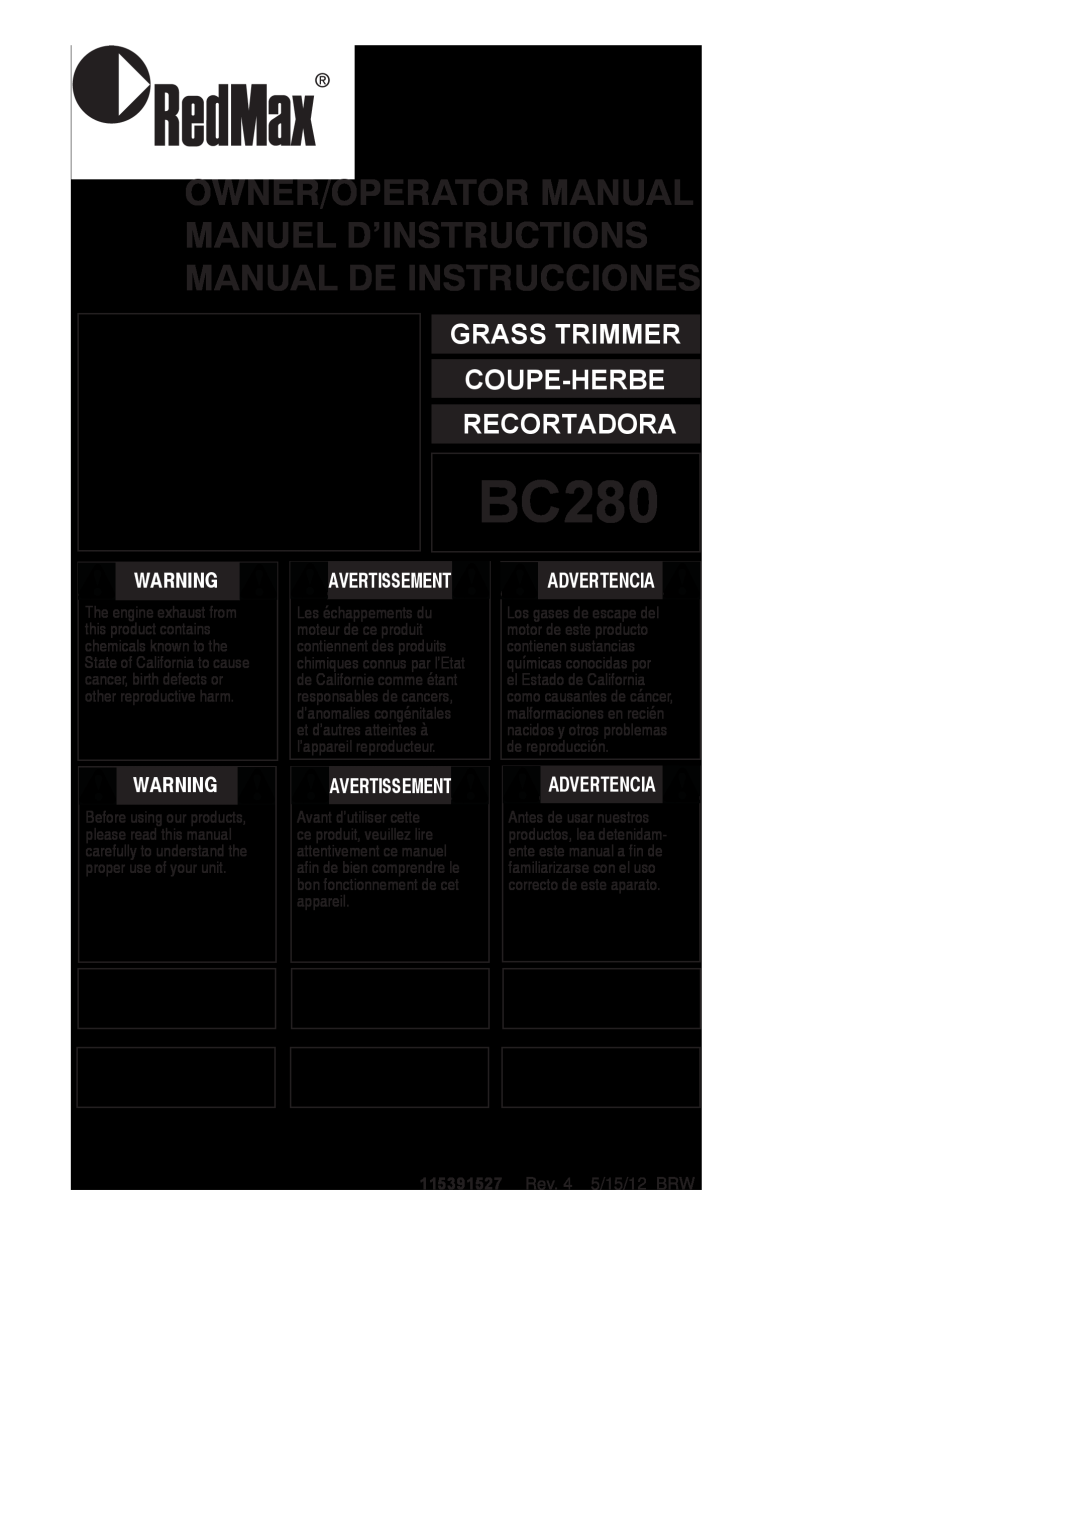 RedMax BC280 manual Grass Trimmer Coupe-Herbe Recortadora, Avertissement, Advertencia, 115391527 Rev. 4 5/15/12 BRW 